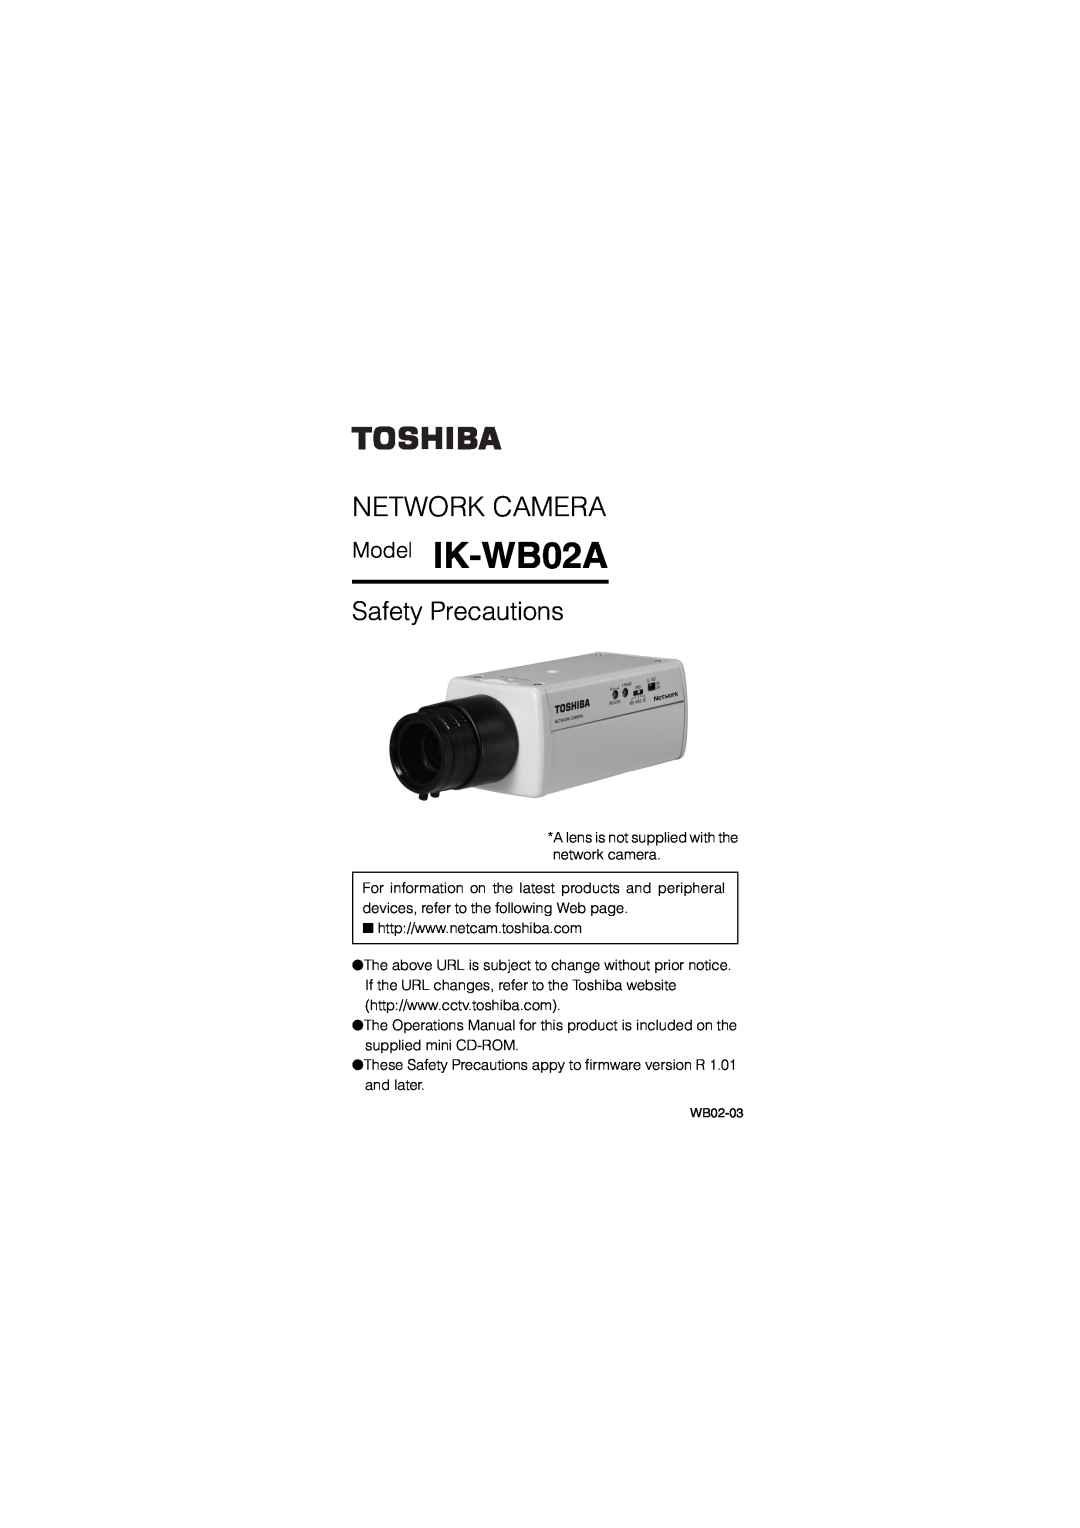 Toshiba manual Model IK-WB02A, Network Camera, Safety Precautions 